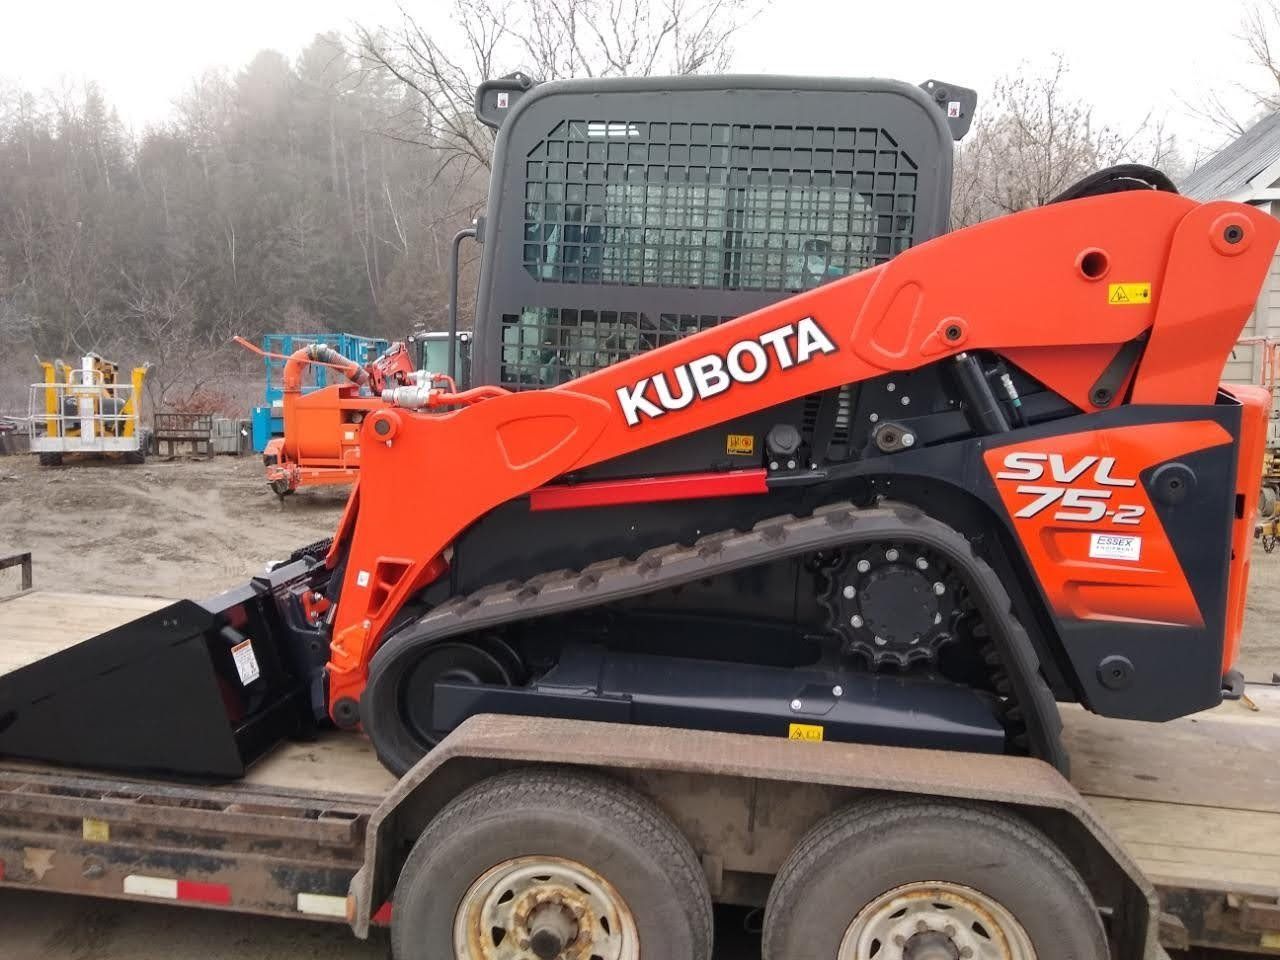 Kubota large equipment rentals in Vermont